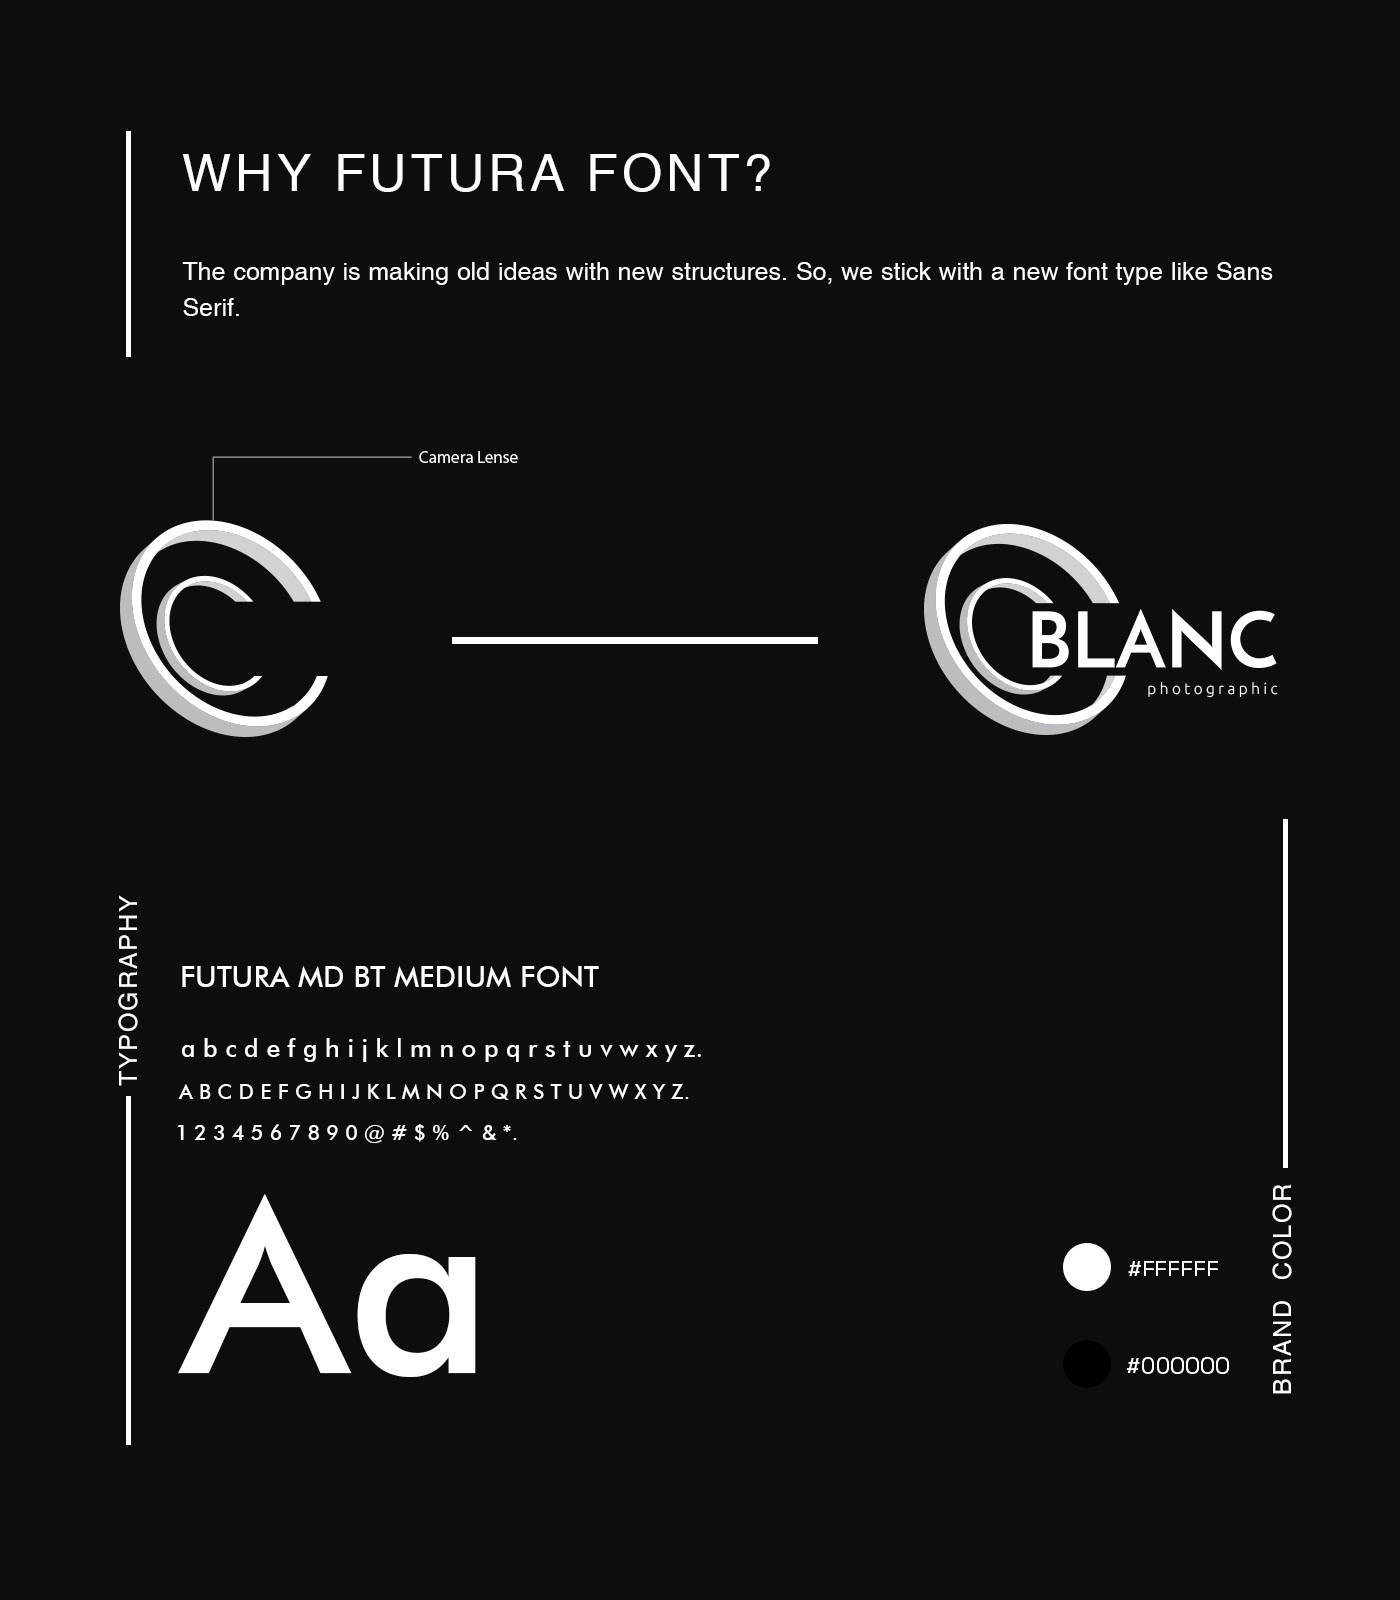 Futura font used that design